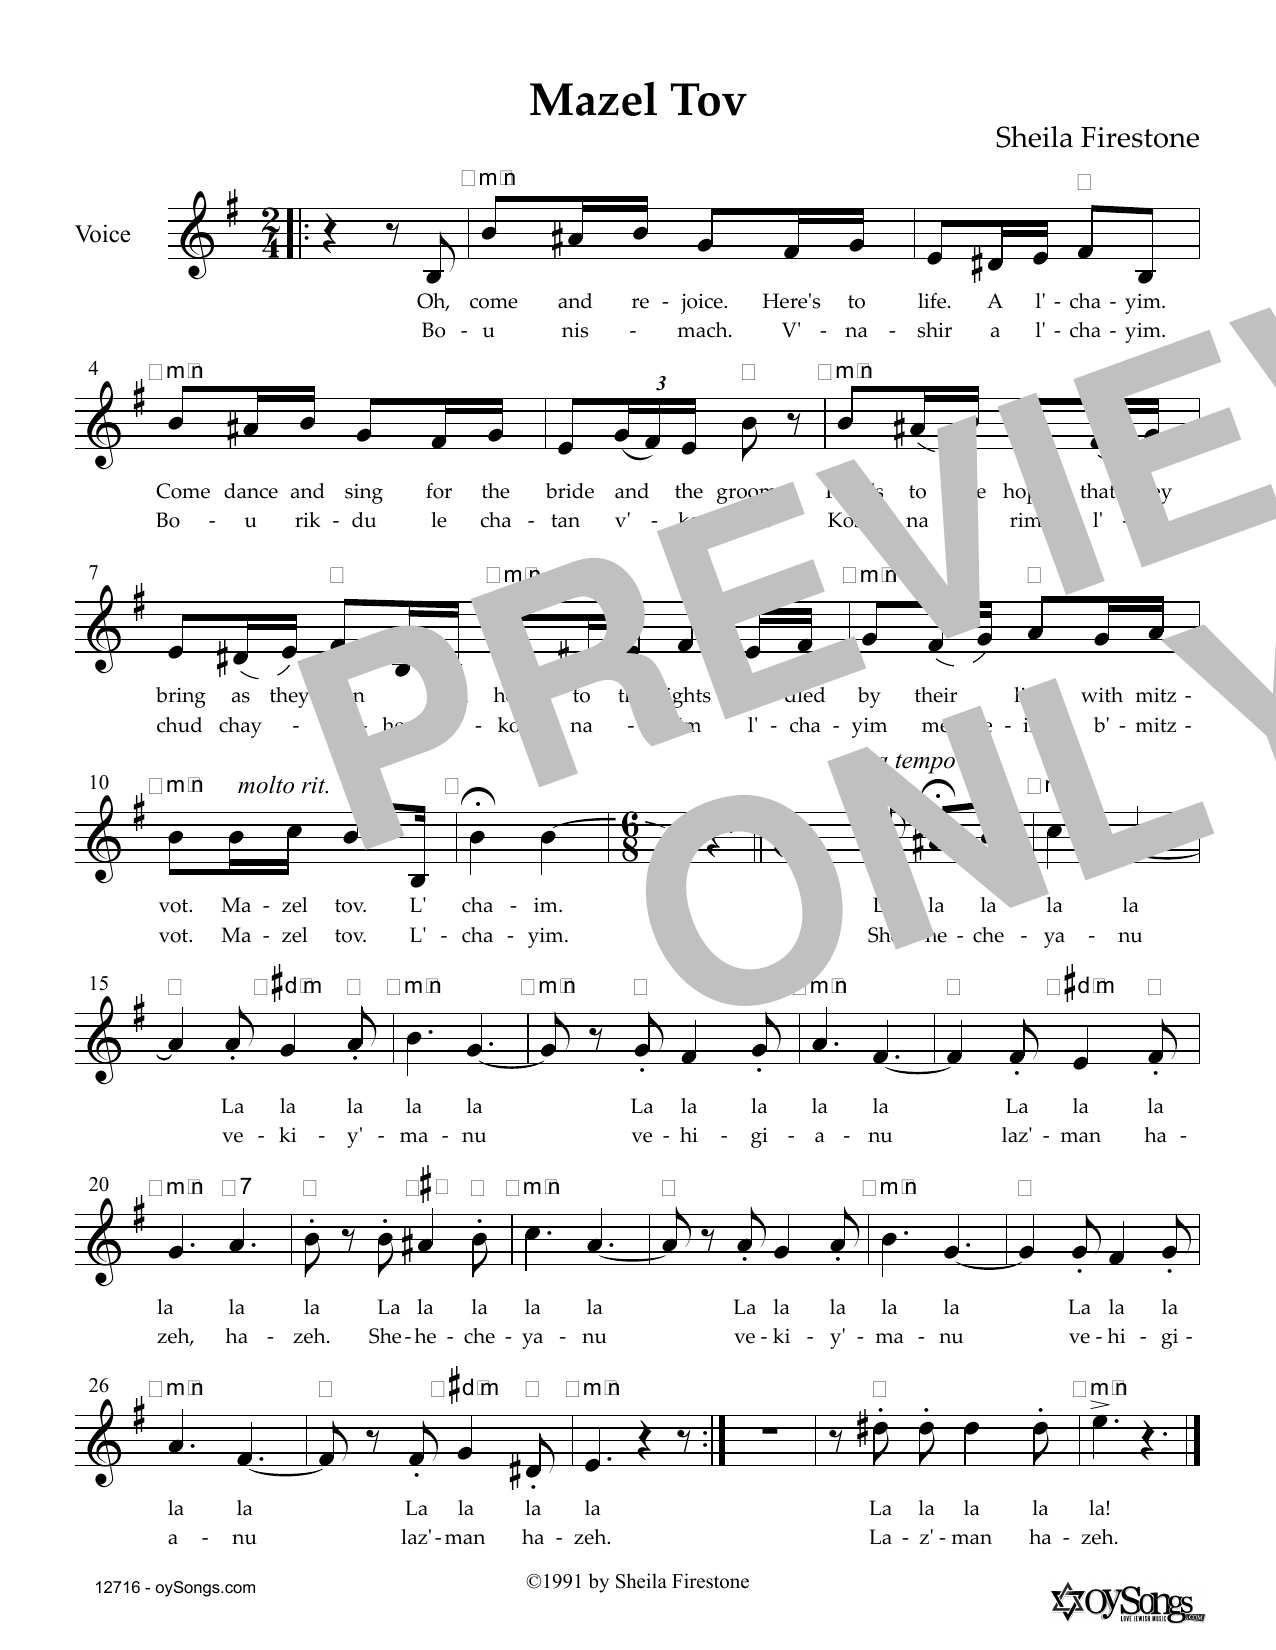 Download Sheila Firestone Mazel Tov Firestone Lead Sheet Music and learn how to play Melody Line, Lyrics & Chords PDF digital score in minutes